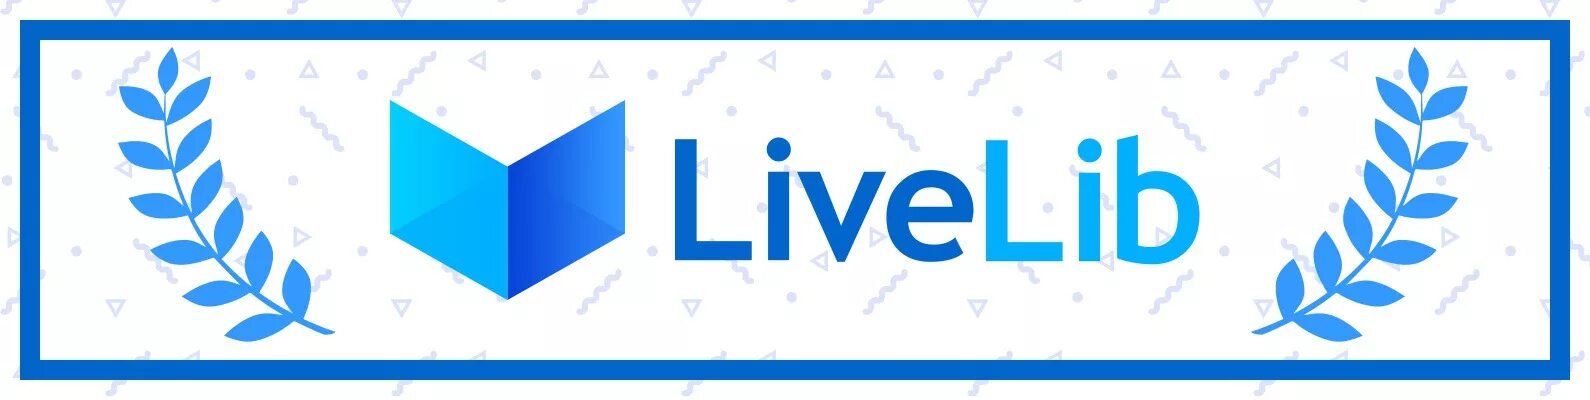 Ливлиб логотип. Значки Лайвлиб. Эмблема Лайвлиб. Livelib приложение.